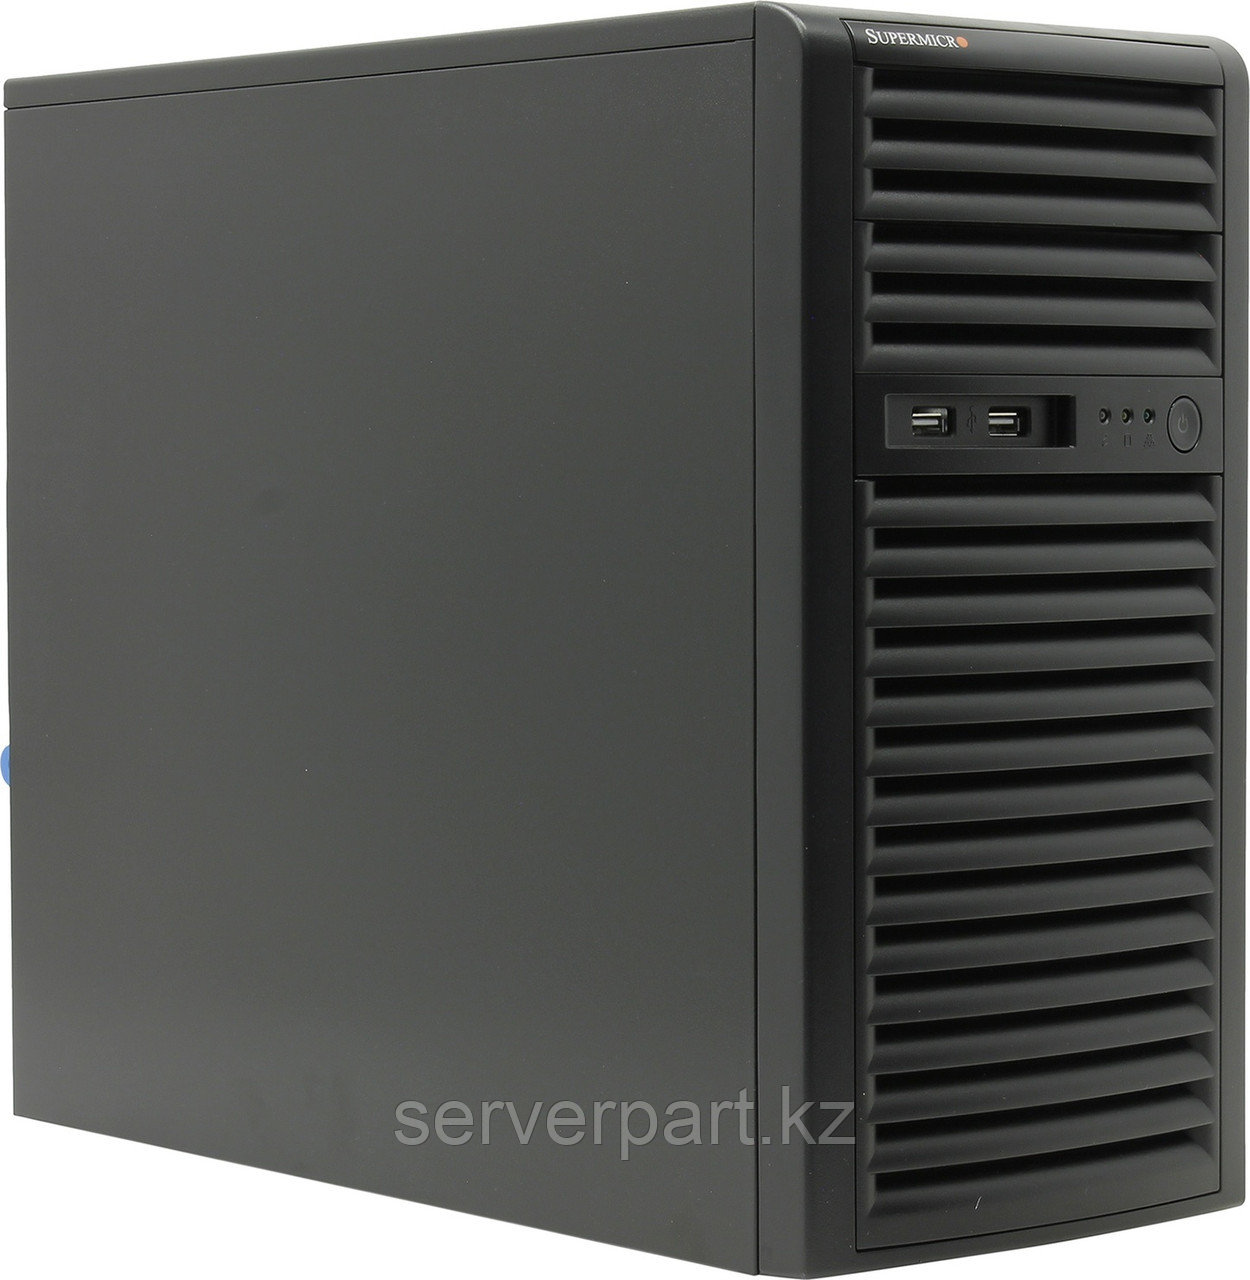 Сервер Supermicro 732-500B\X11DPL-i Tower 4LFF/1x8-core intel Xeon 3204 SC-B 1.9GHz/no RAM/no HDD